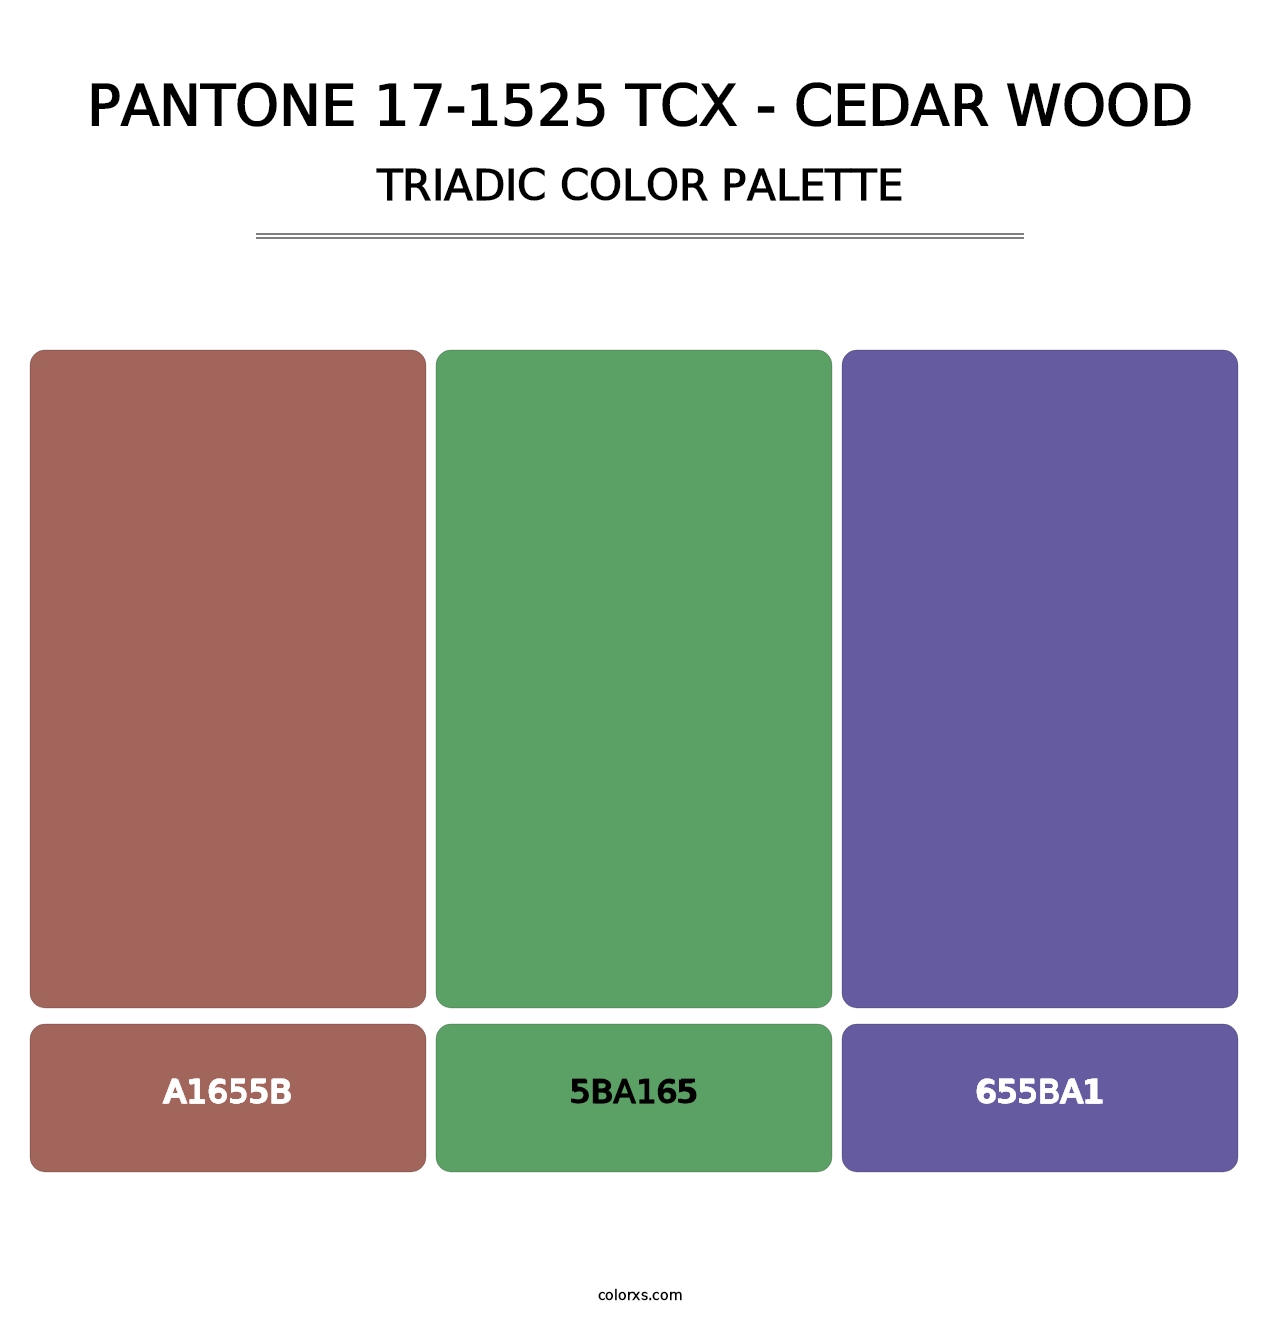 PANTONE 17-1525 TCX - Cedar Wood - Triadic Color Palette